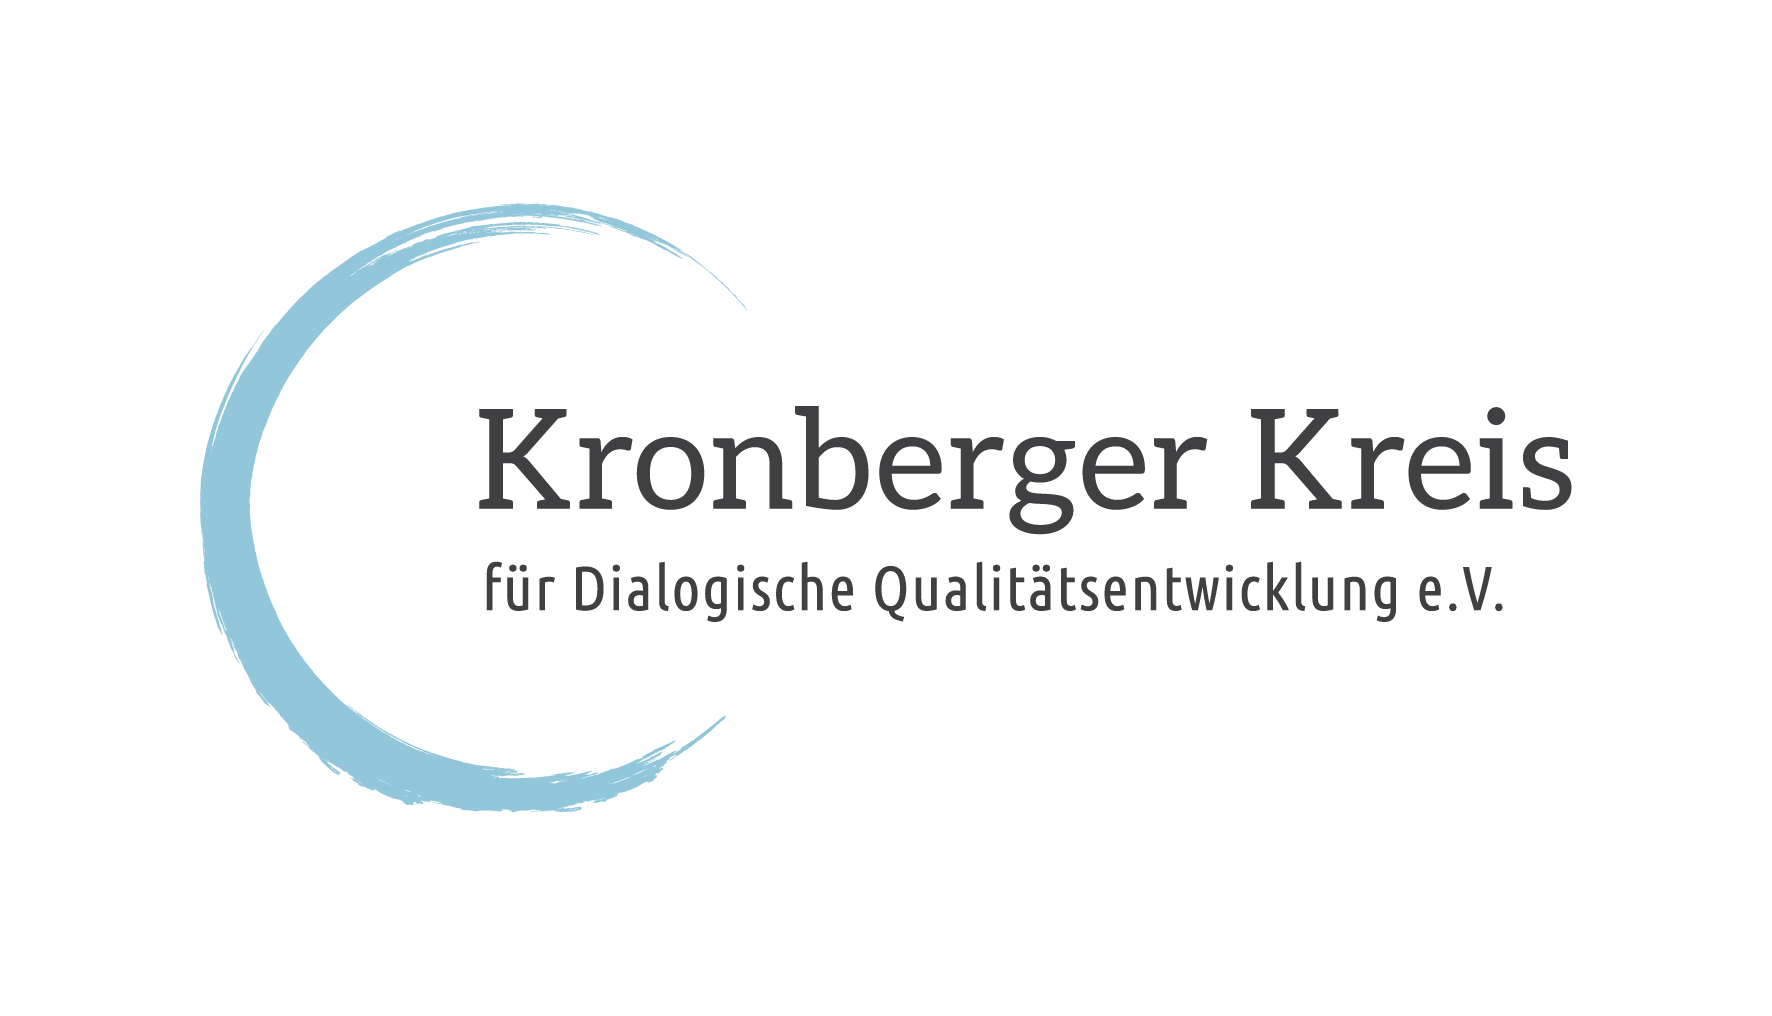 KronbergerKreis_Logo_print.png